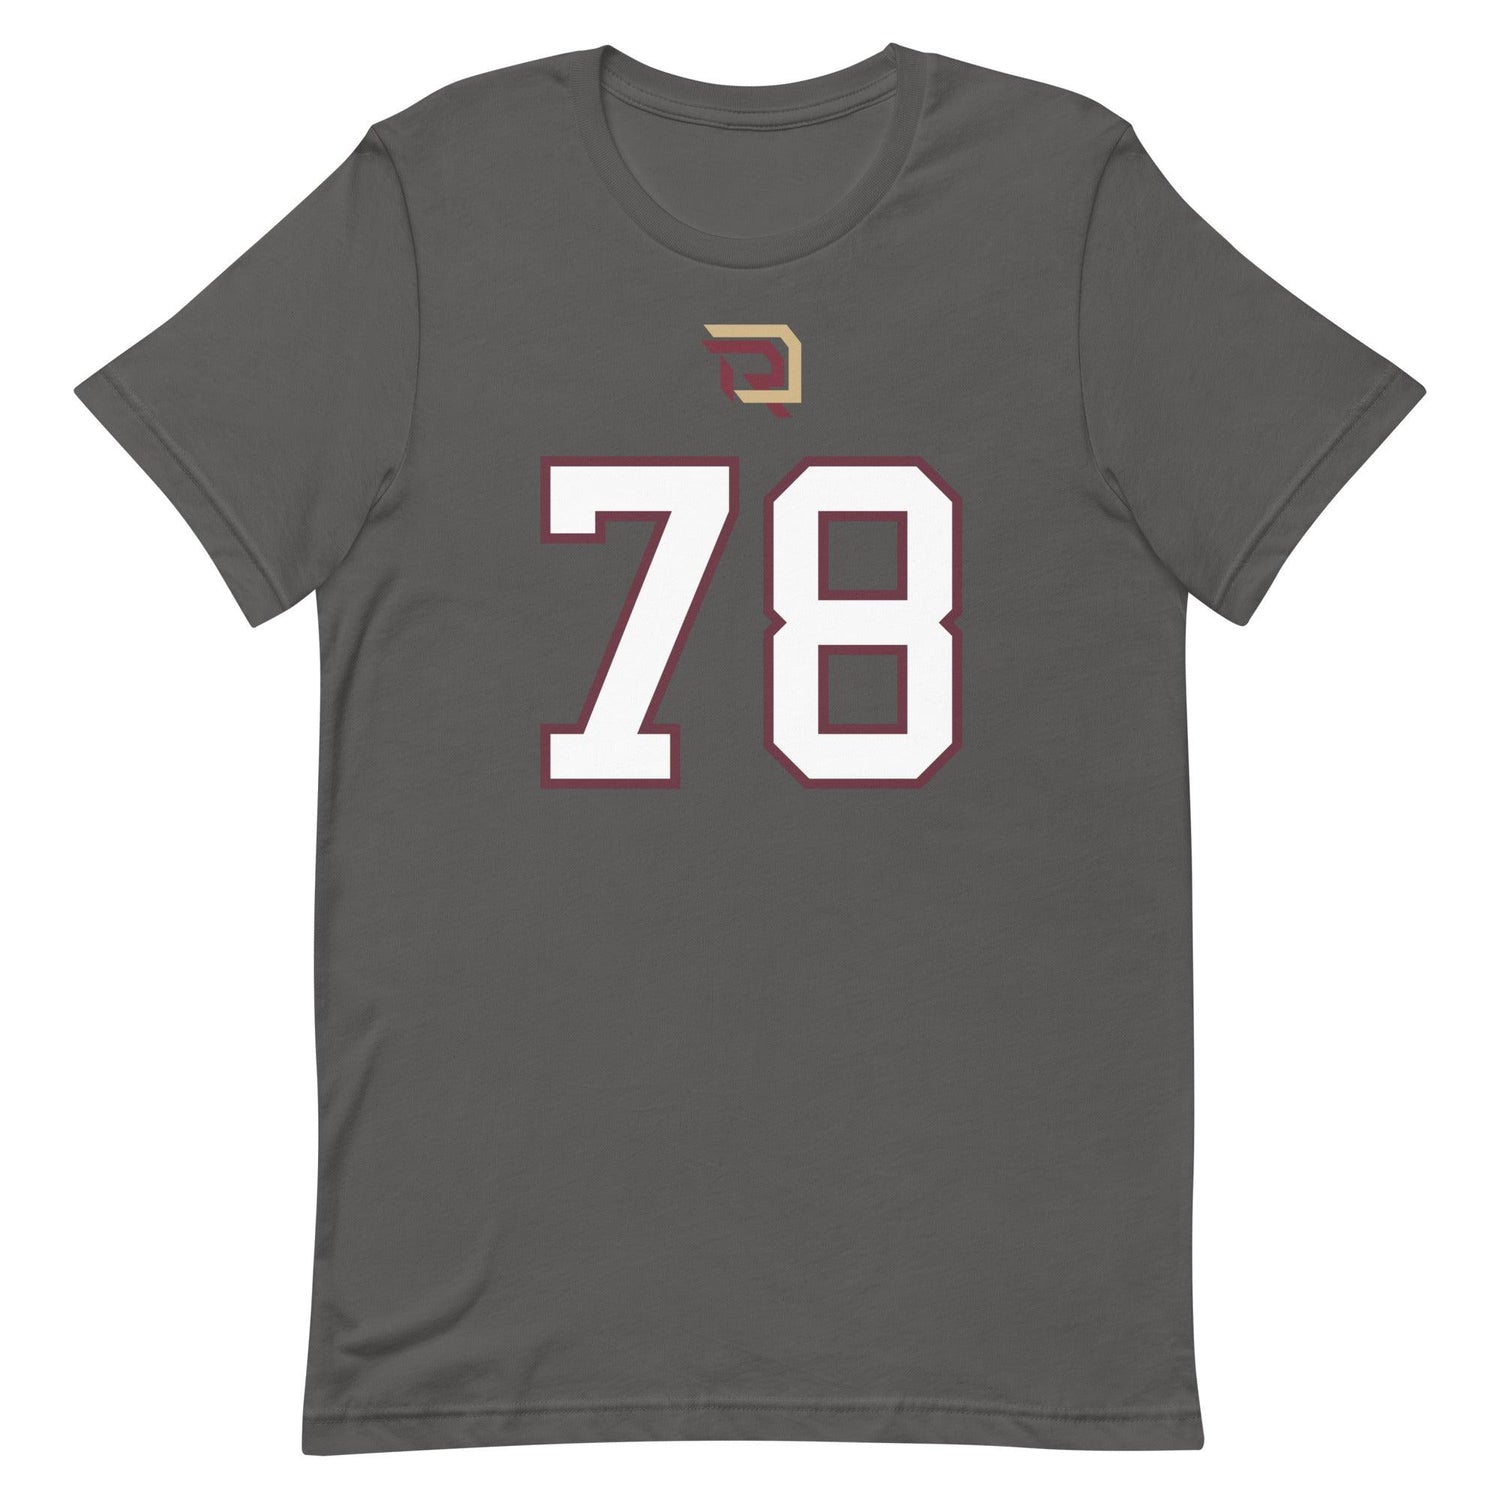 Daughtry Richardson "Jersey" t-shirt - Fan Arch